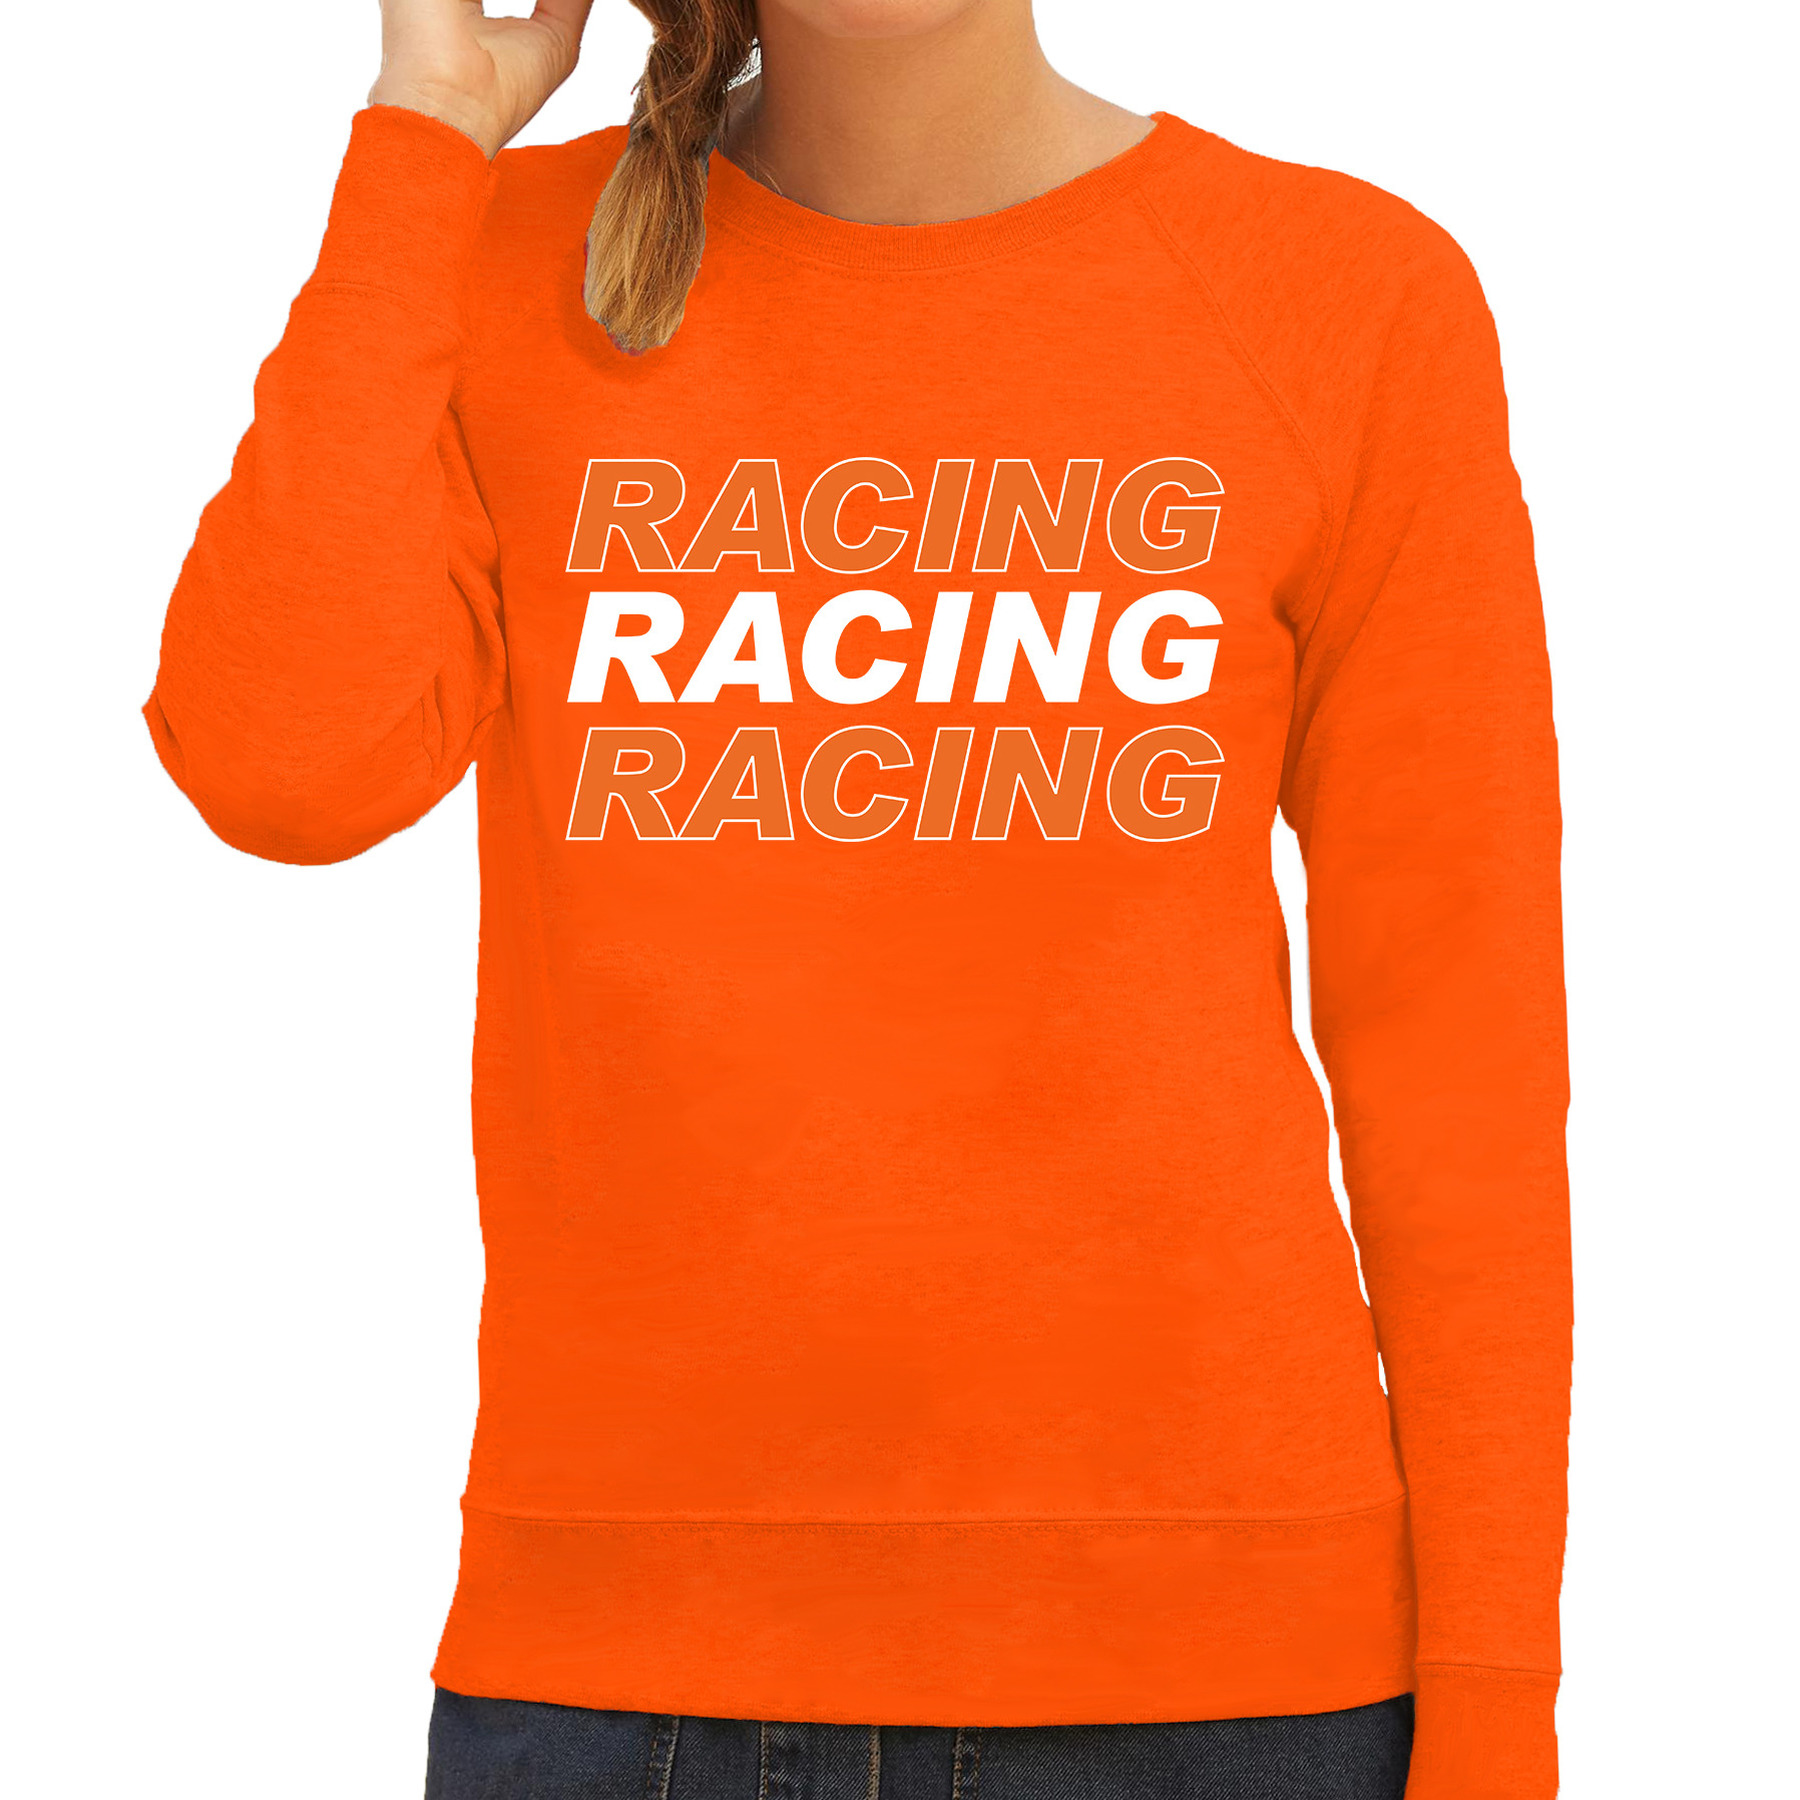 Racing supporter - race fan sweater oranje voor dames